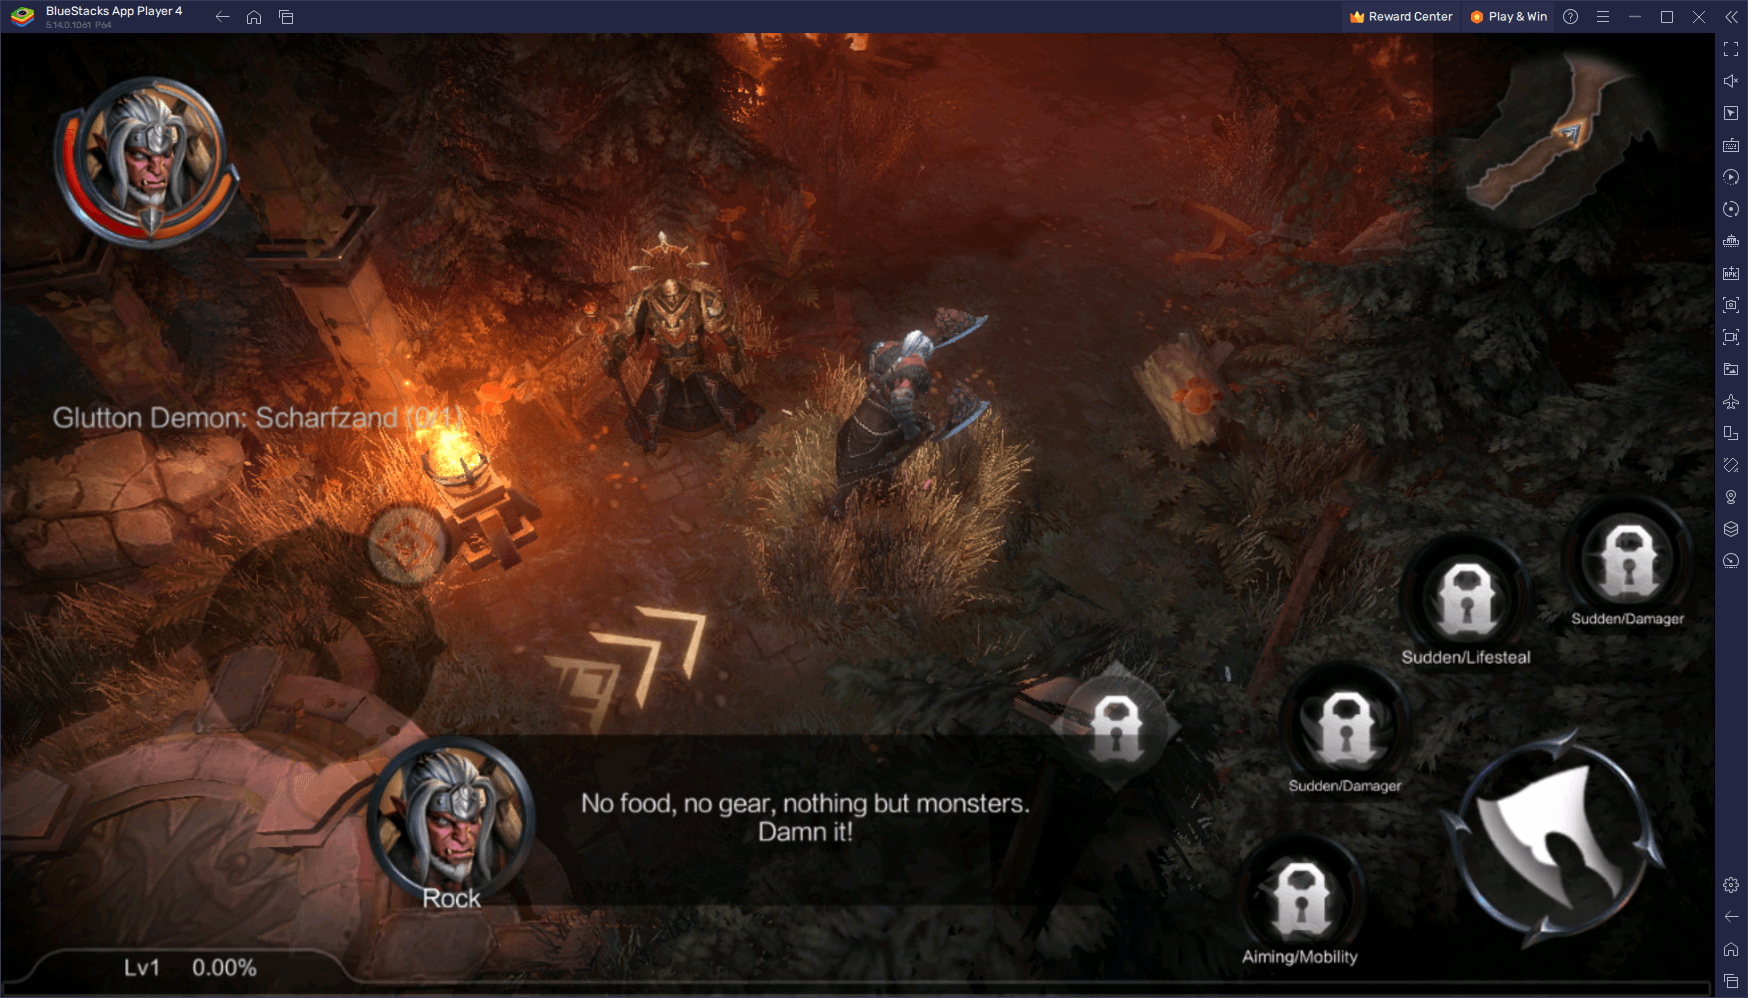 How to Play Raziel Rebirth: Dungeon Raid on PC with Bluestacks